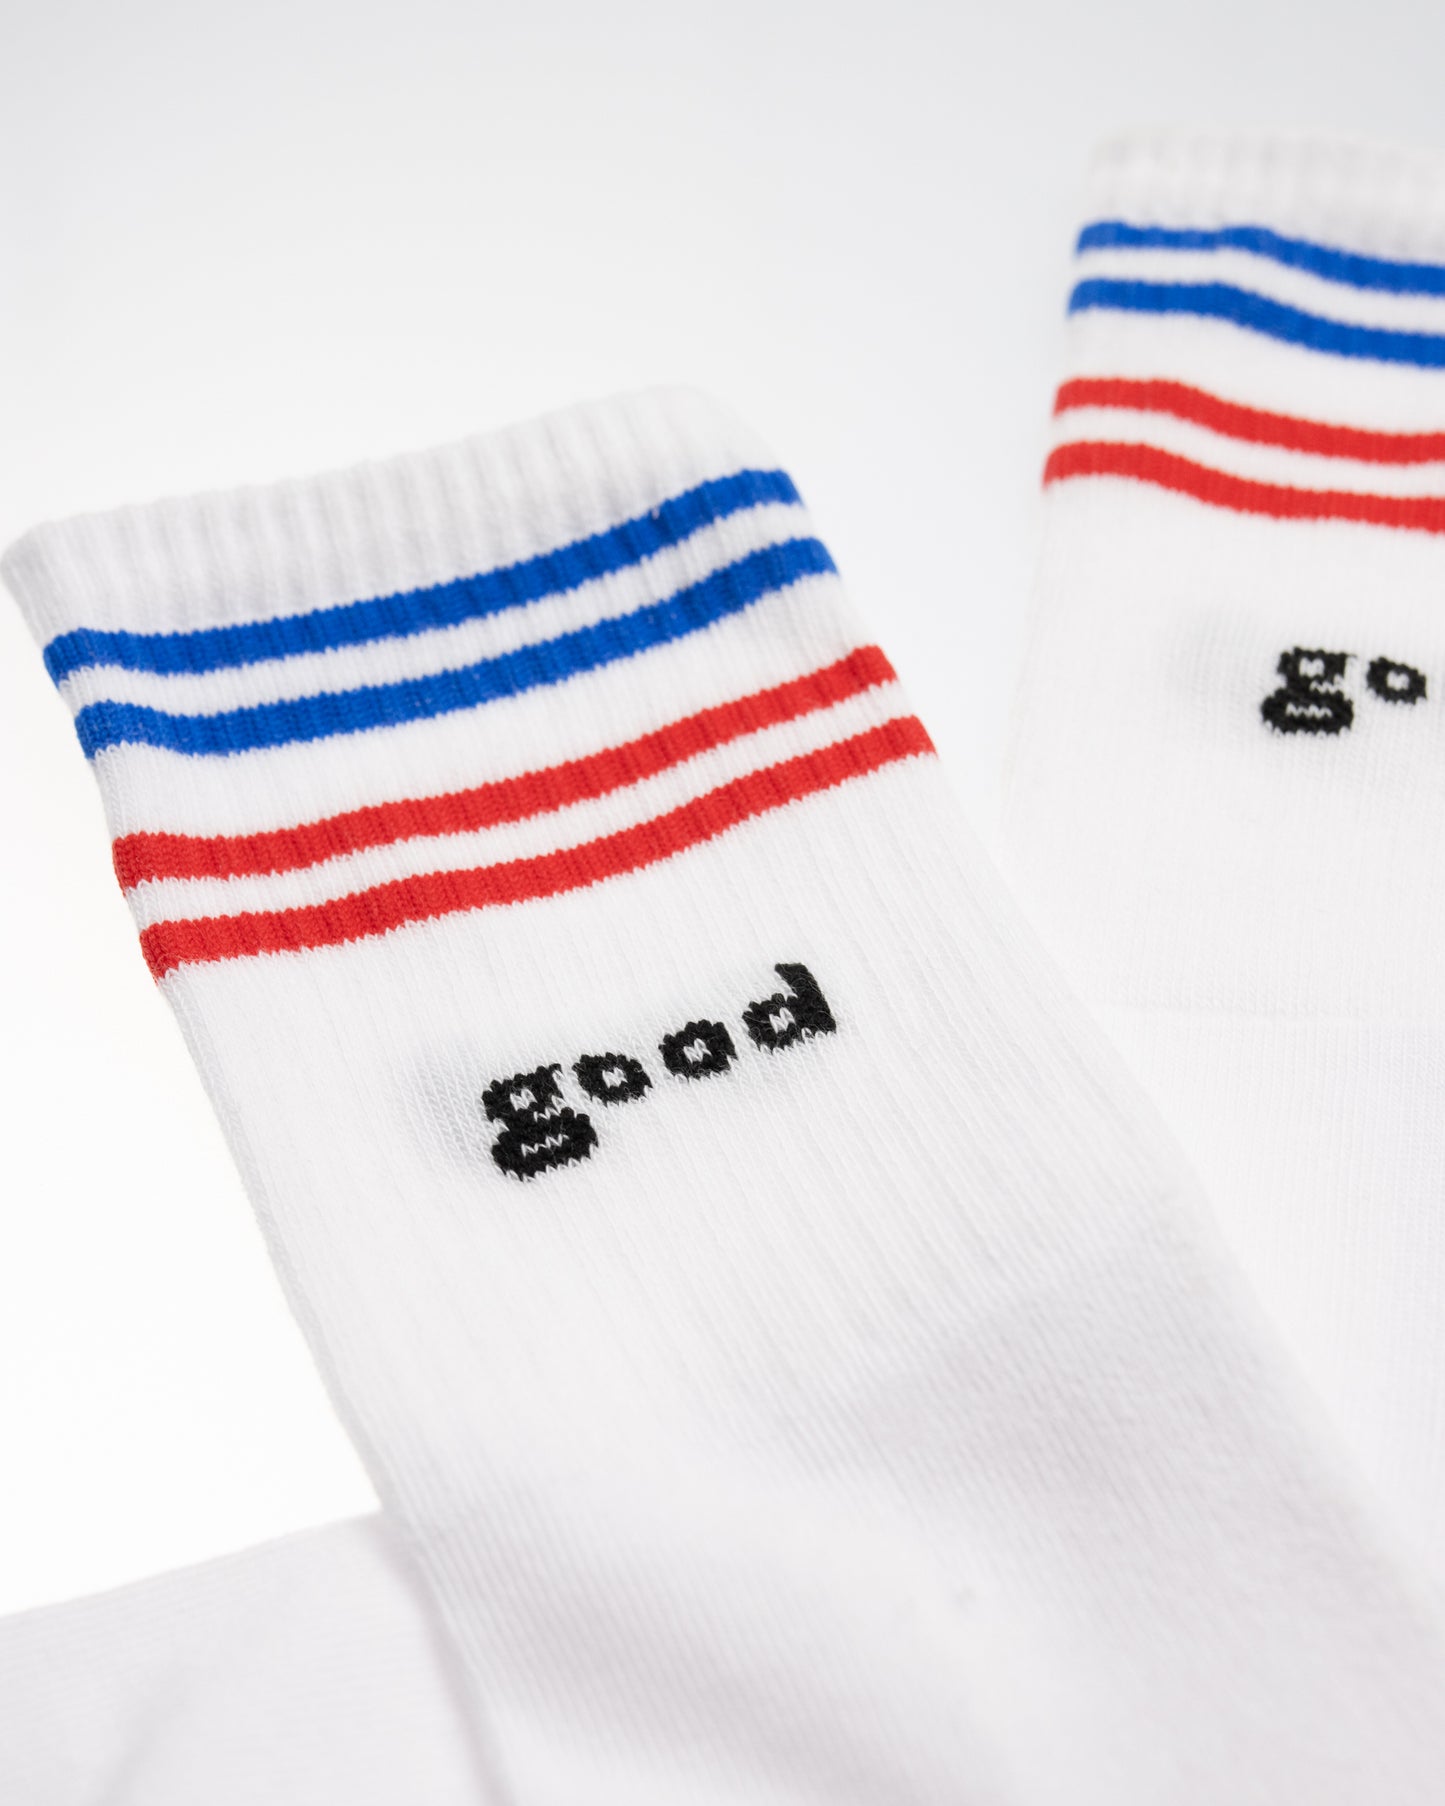 Classic Athletic Tube Socks from Good Socks